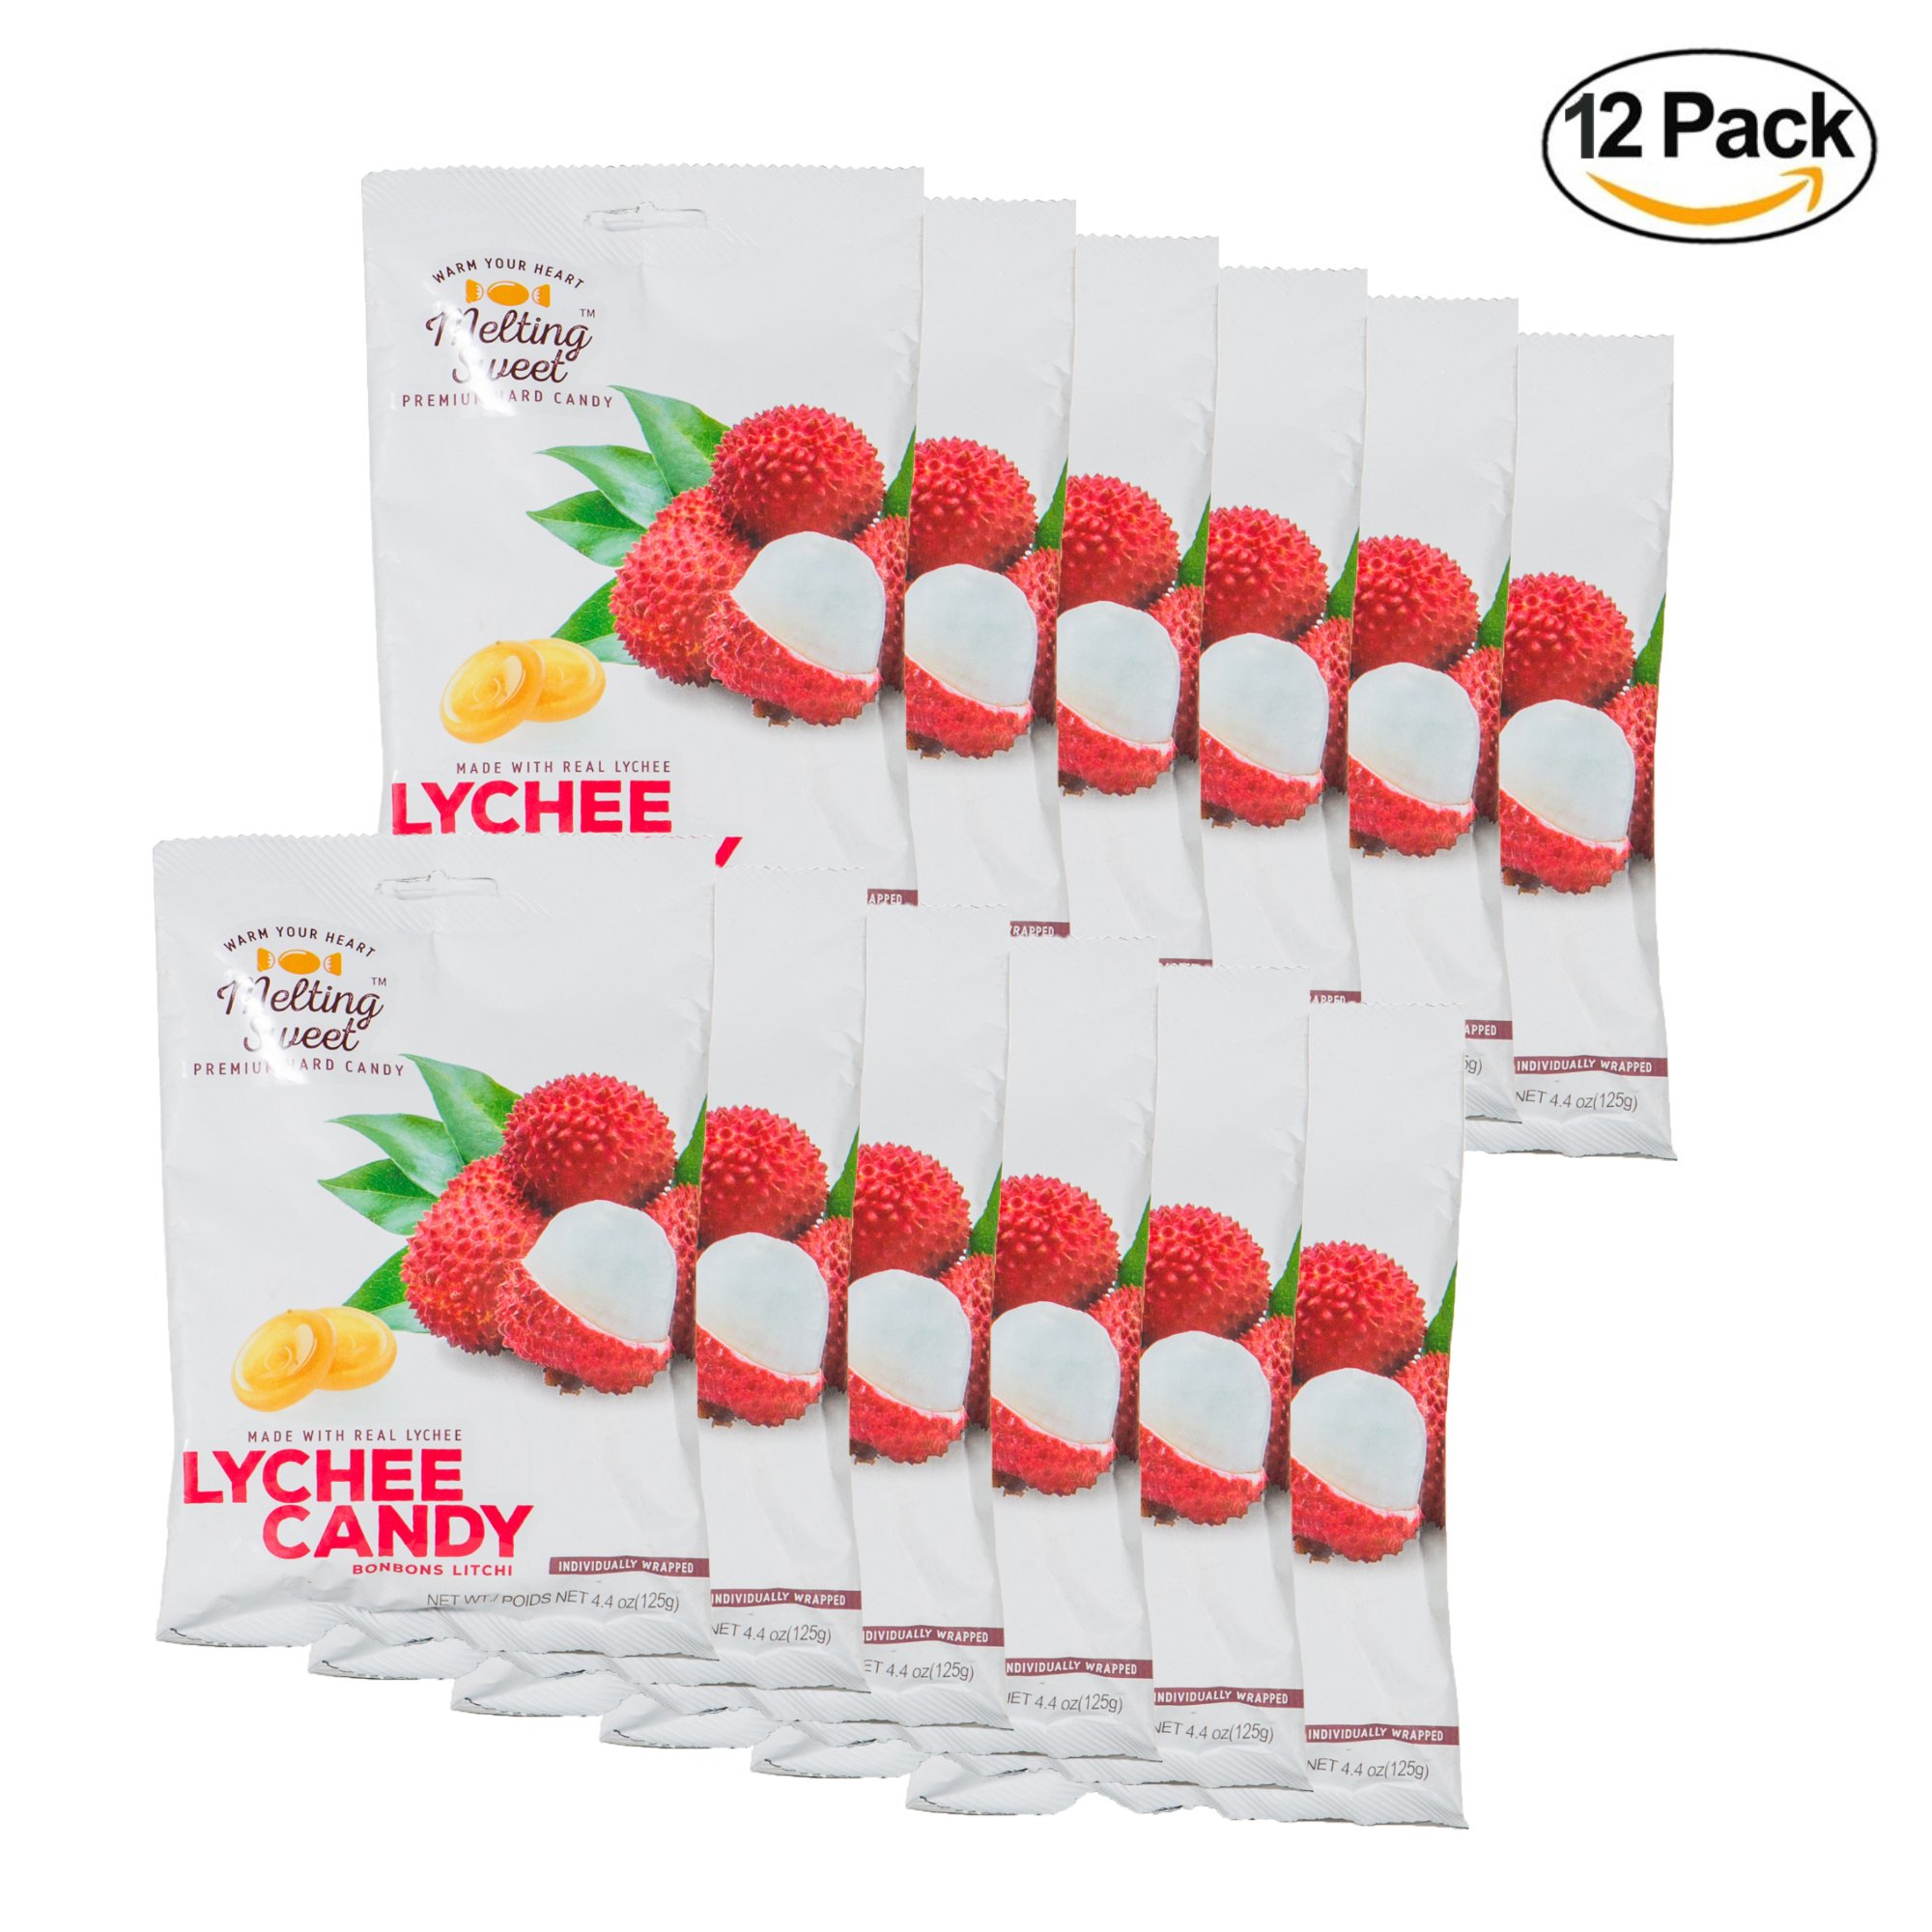 Melting Sweet Premium Individually Wrapped Hard Candy Ginger Coconut Lychee Ebay 2544